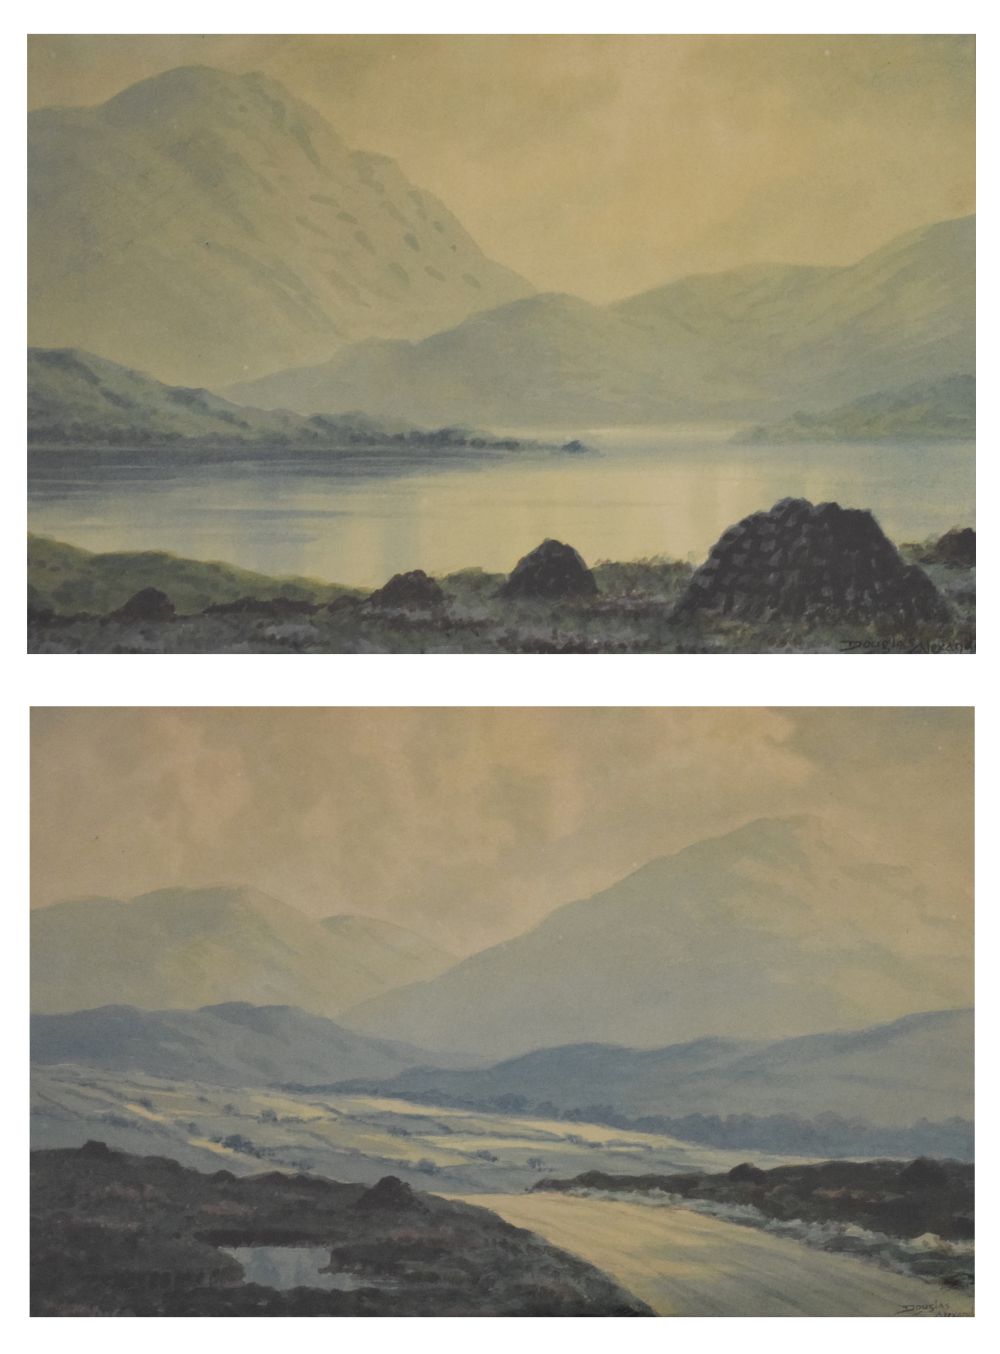 Douglas Alexander (1871-1945) - Pair of watercolours - 'Among the Twelve Pins Connemara', and '